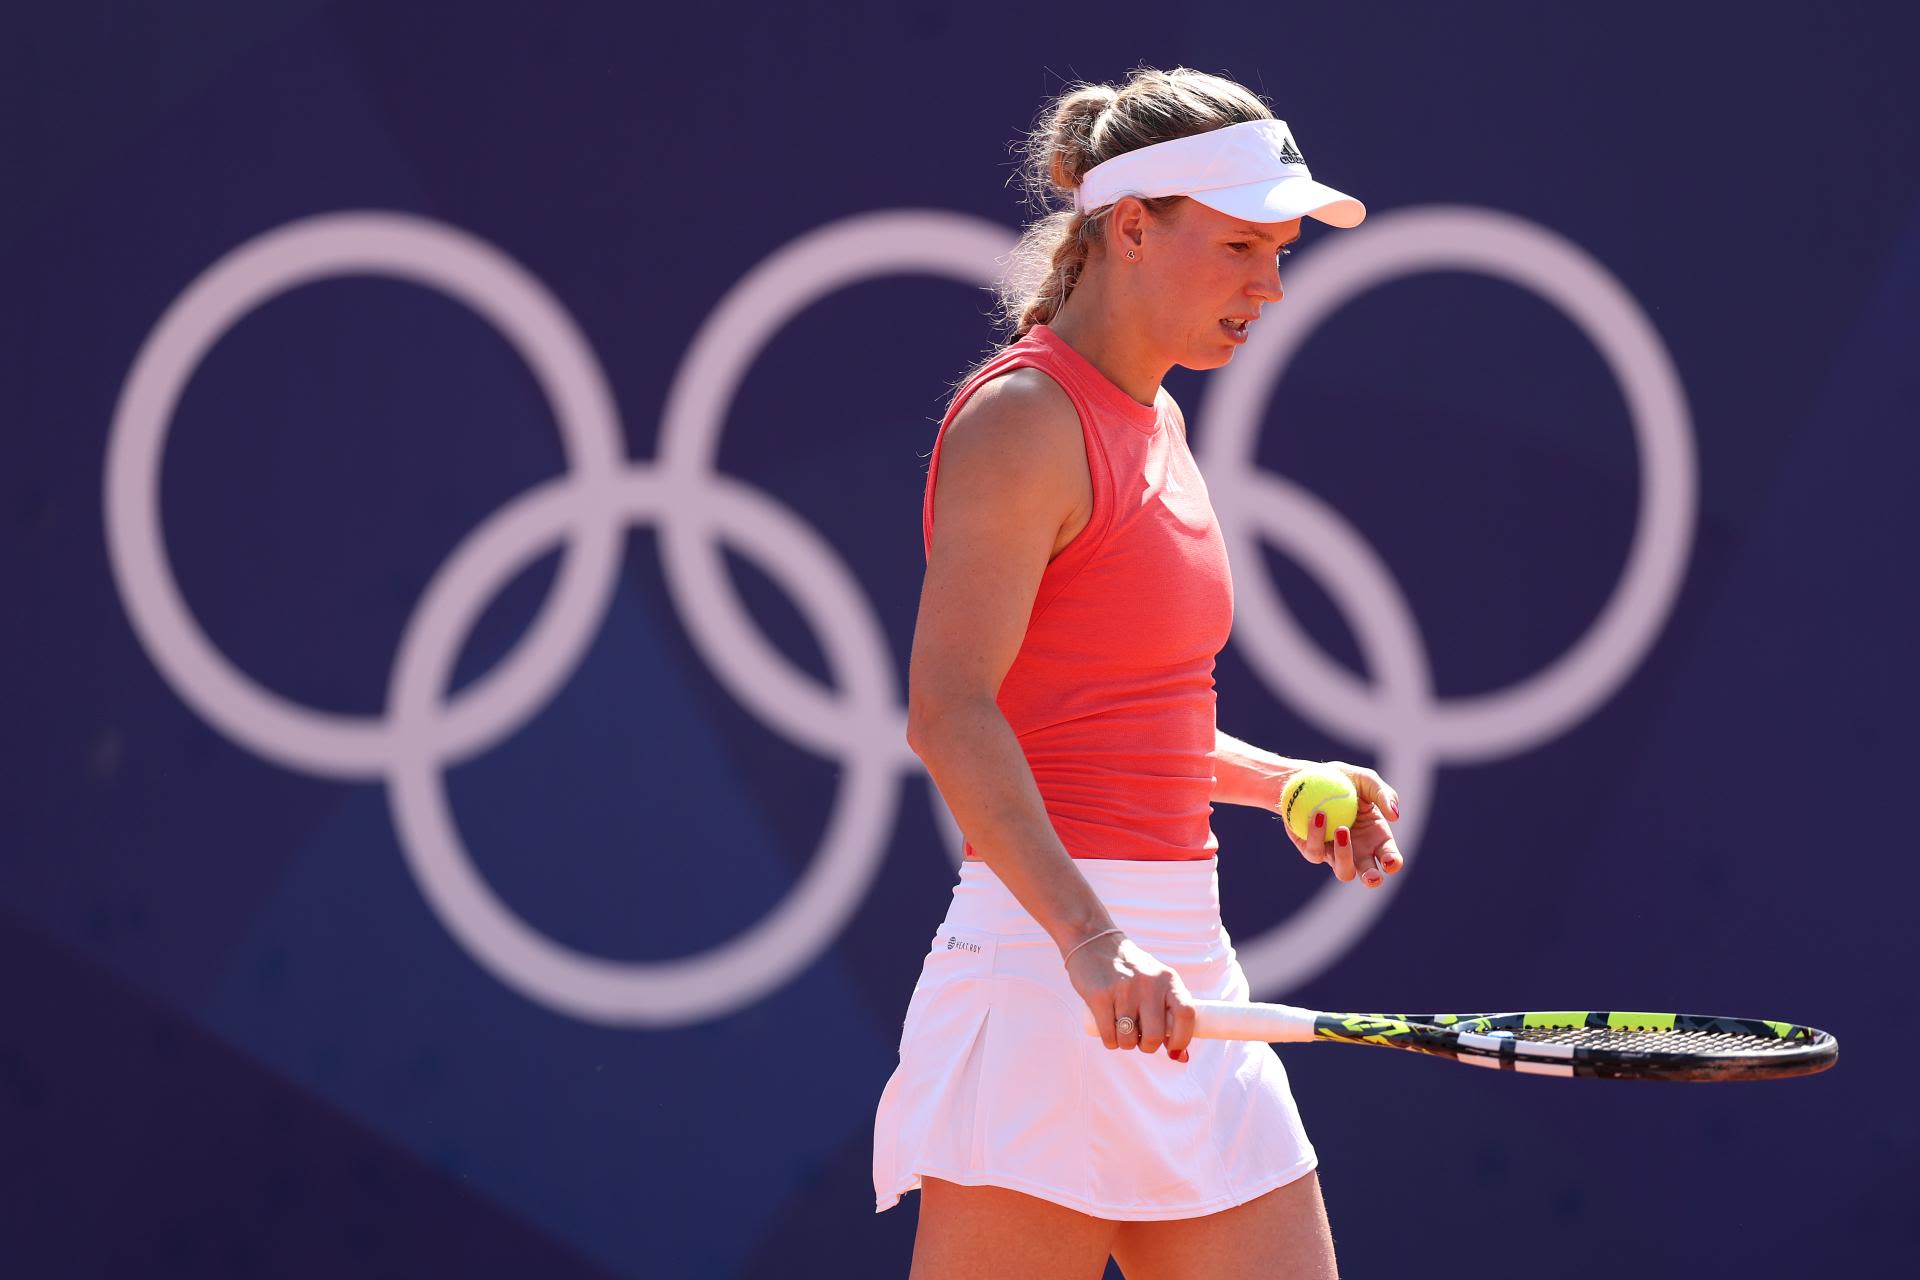 Olympics: Caroline Wozniacki falls short of making big comeback in 2R after collapse